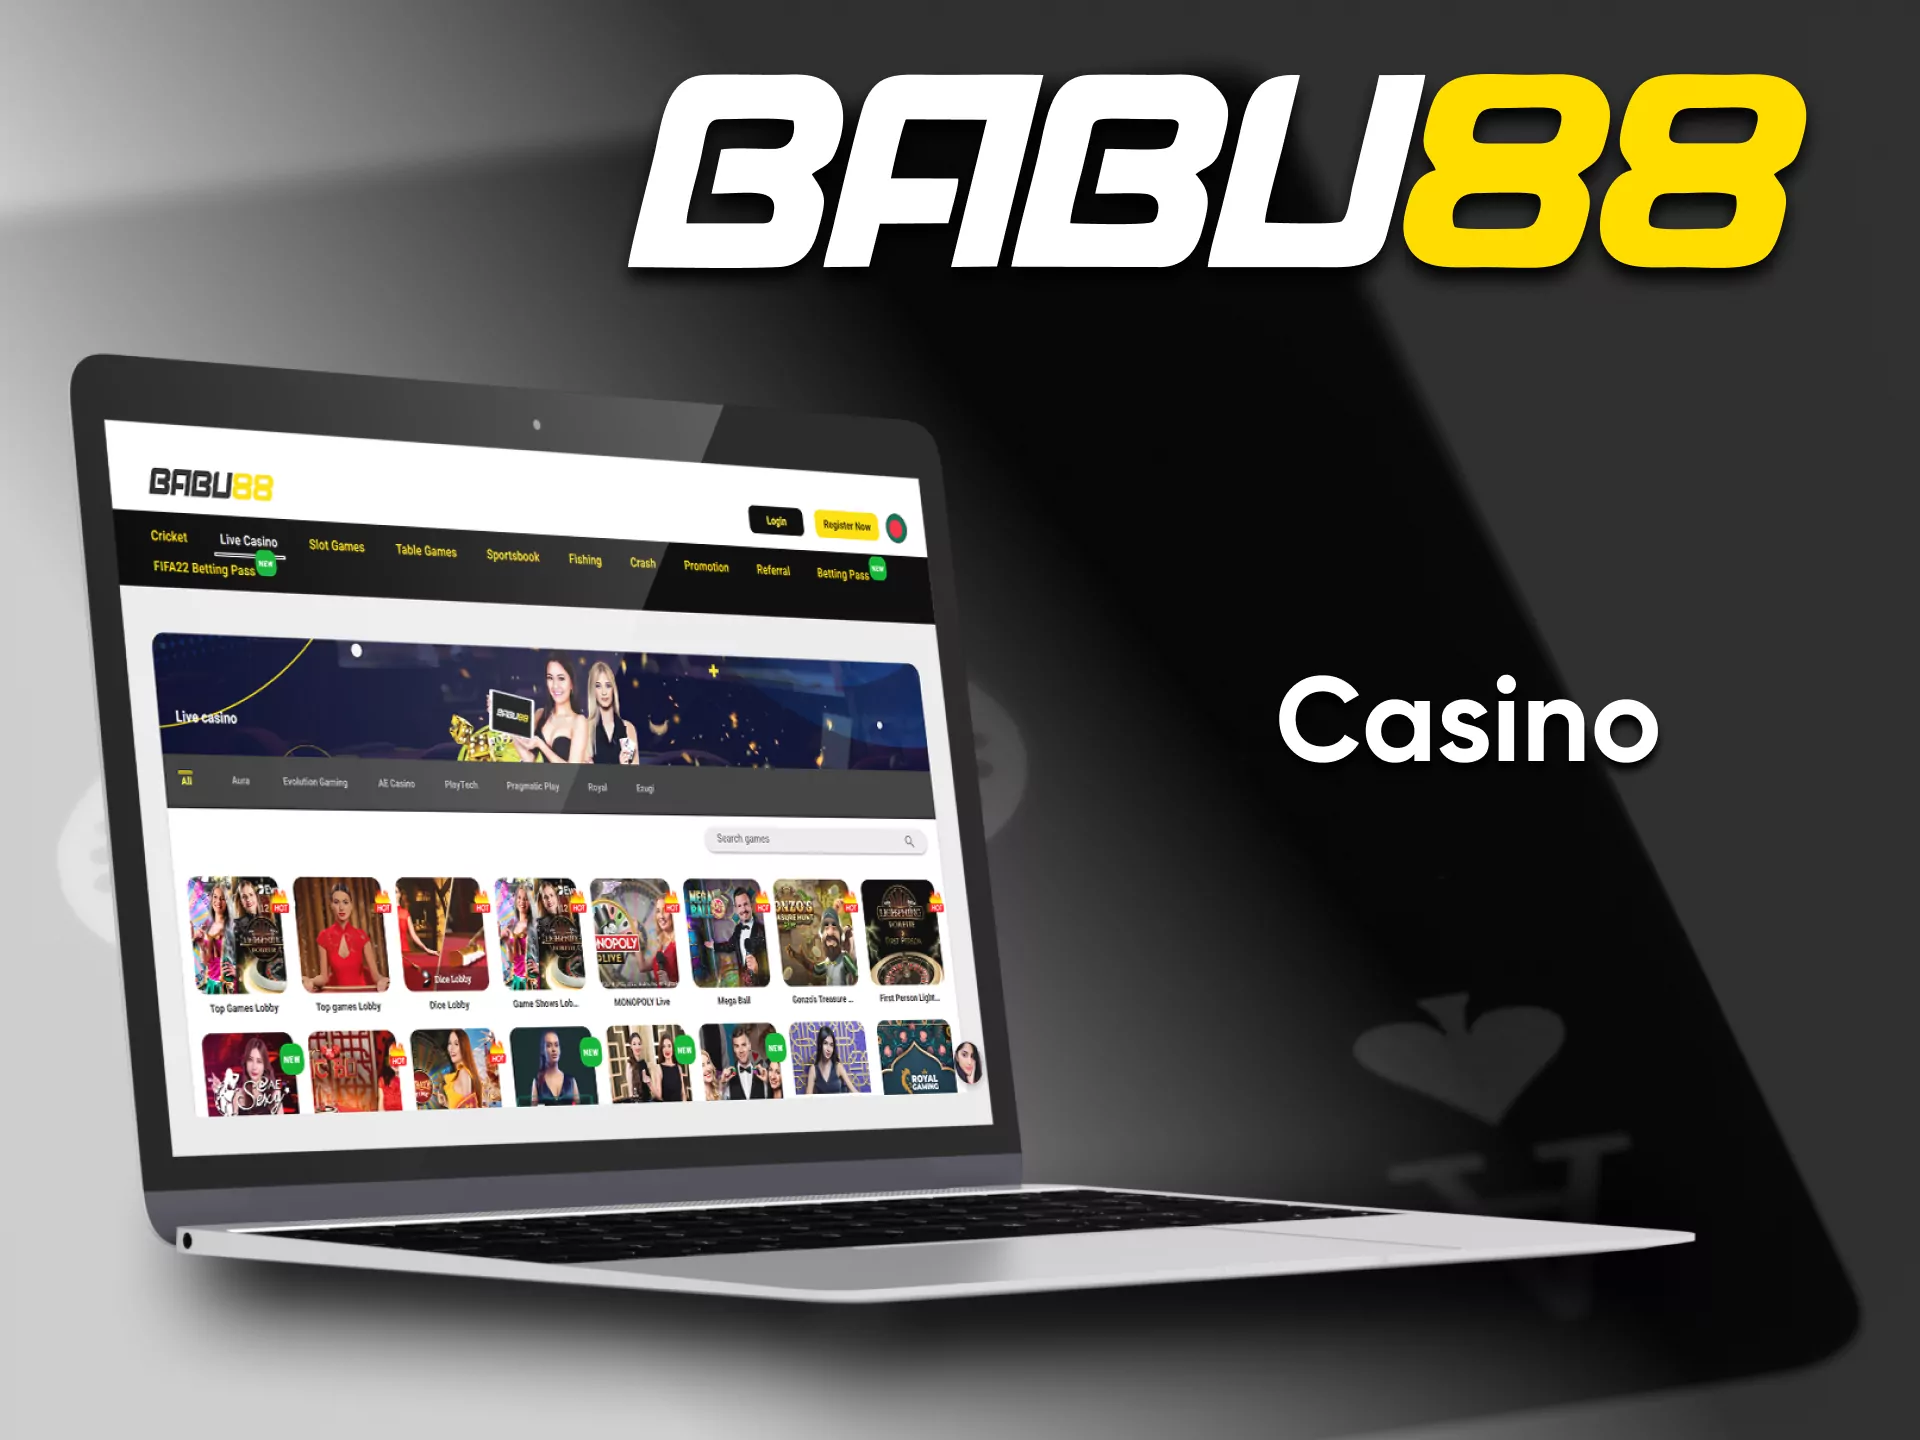 For casino games, choose the Babu88.